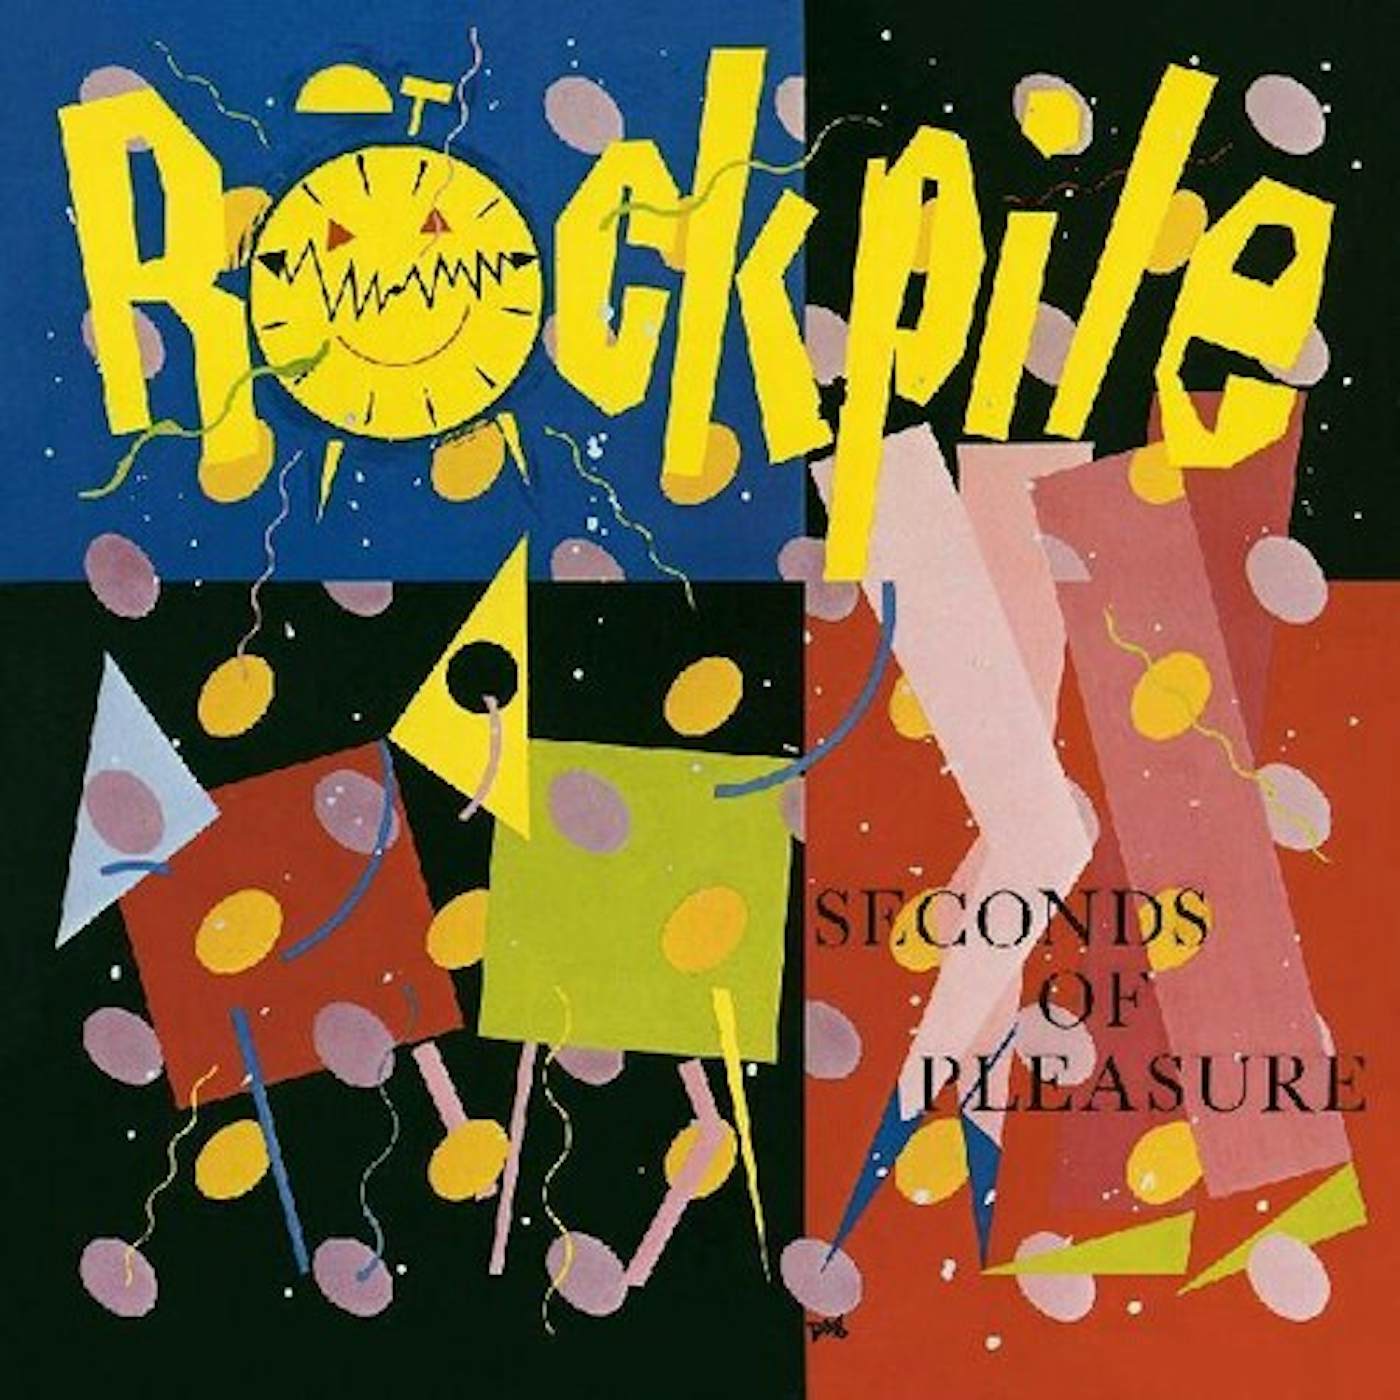 Rockpile Seconds Of Pleasure Vinyl Record